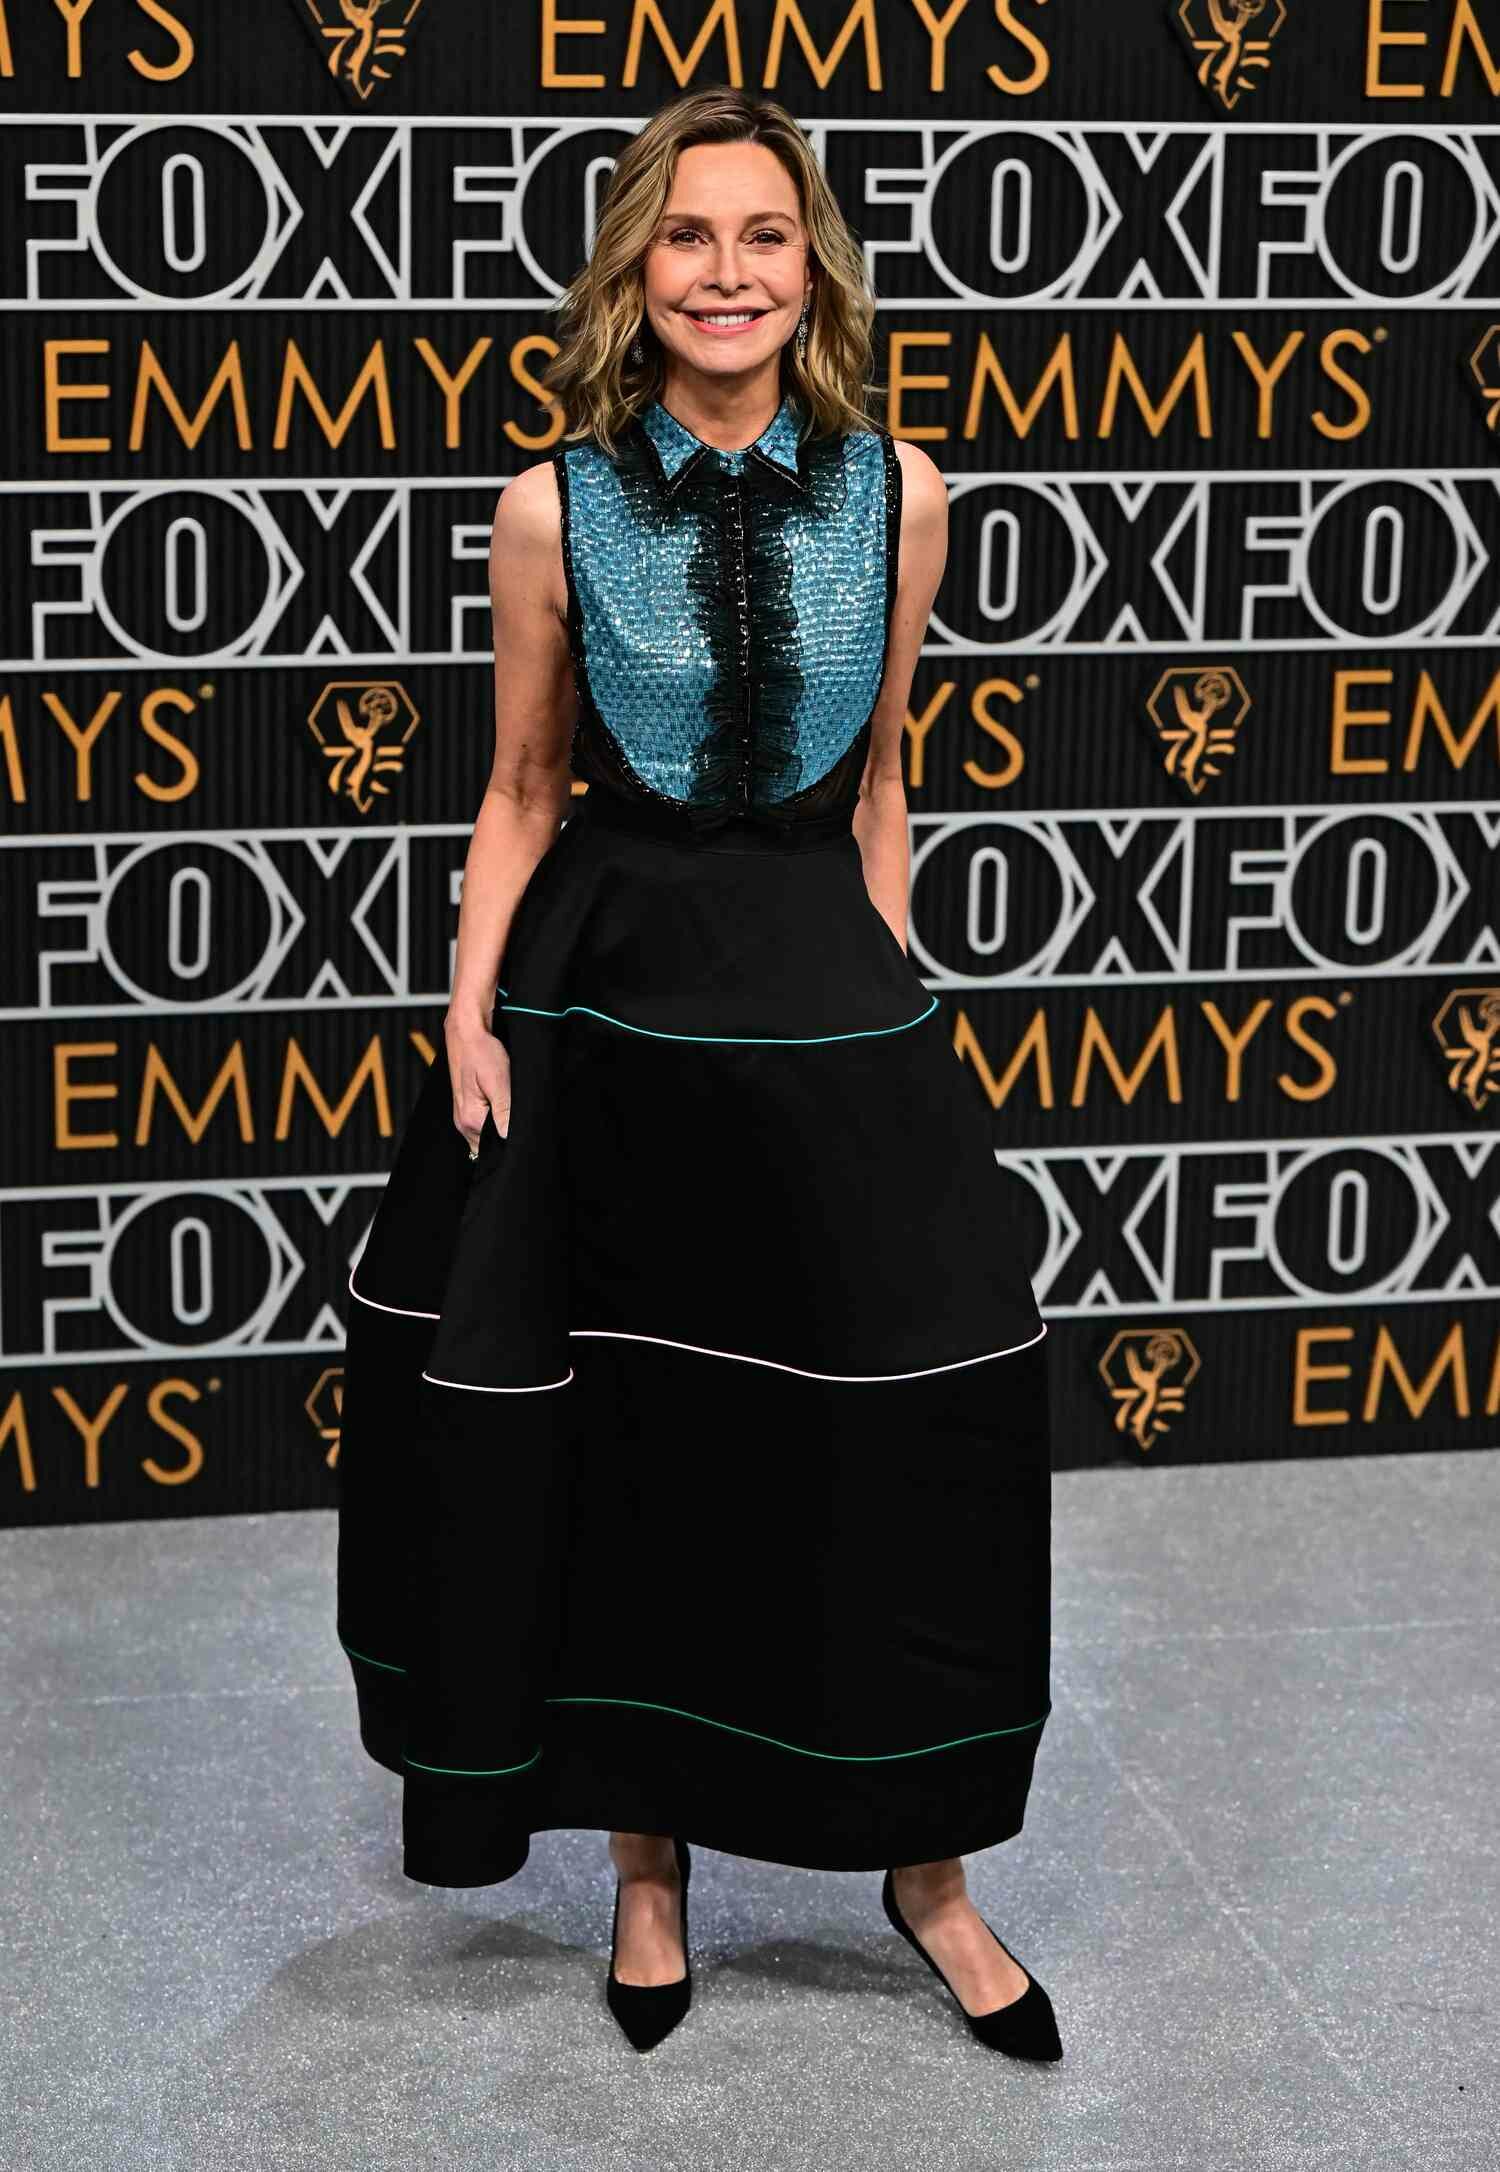 Calista Flockhart at the Emmy Awards